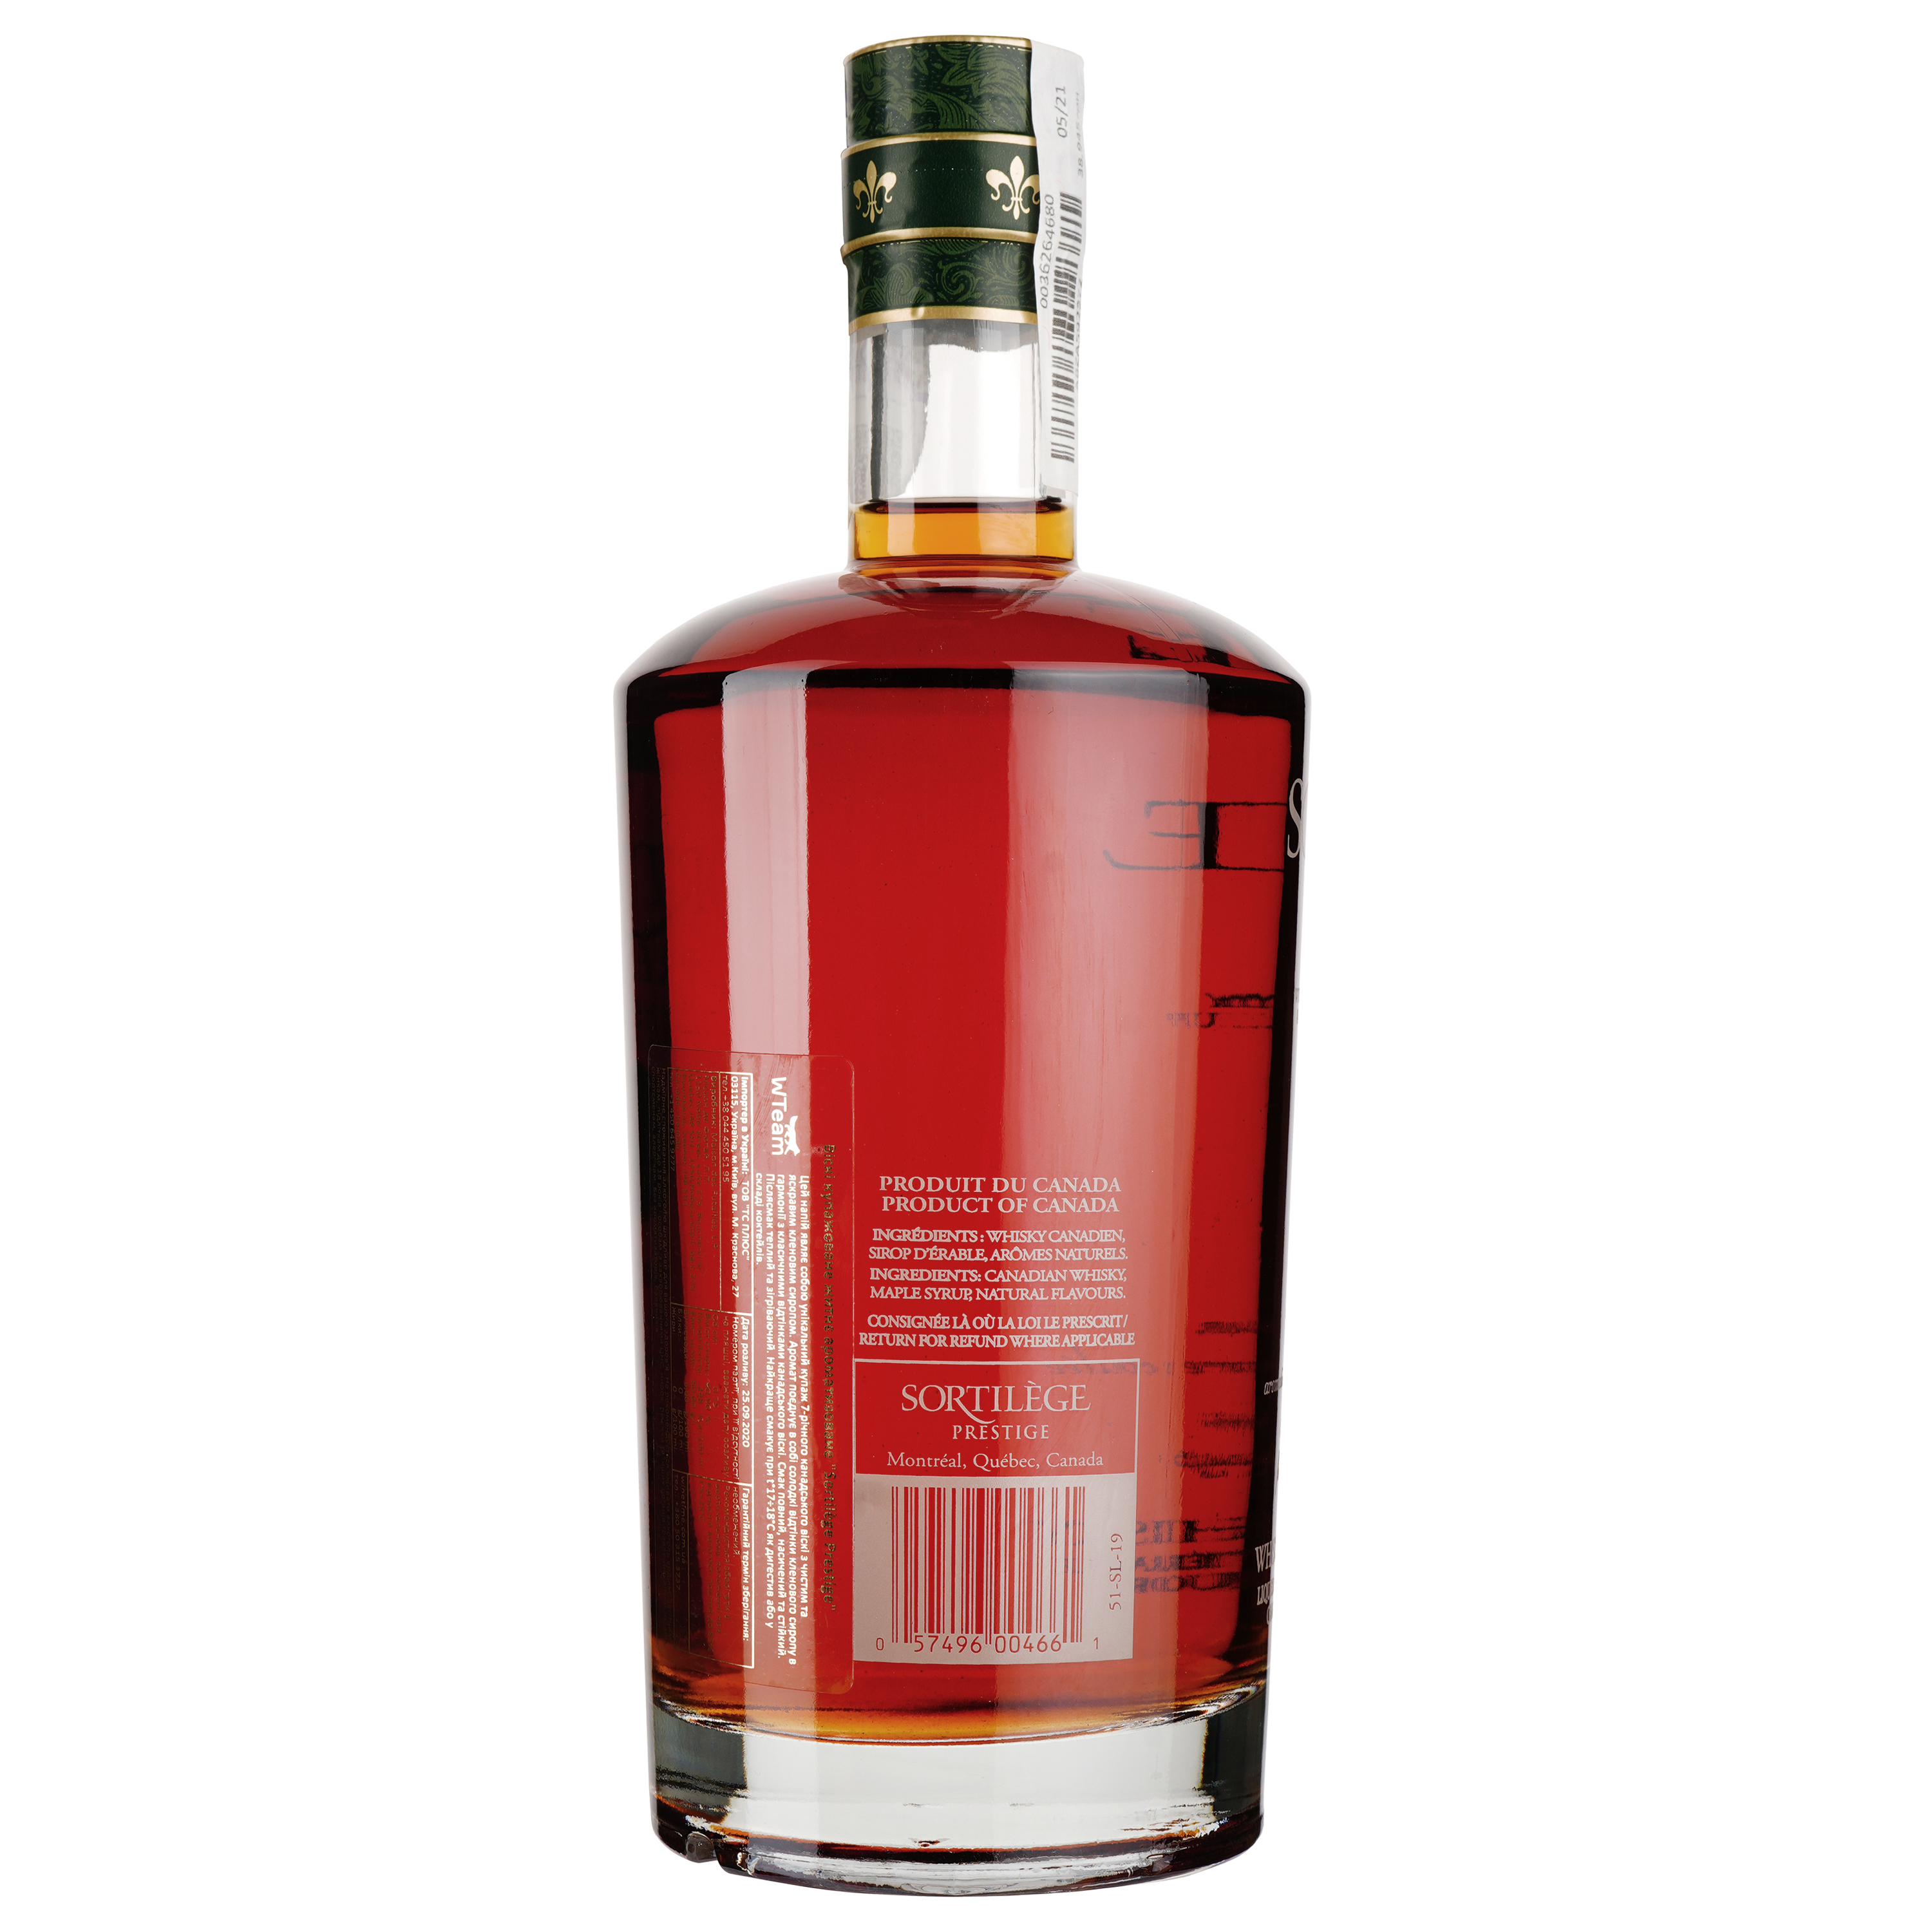 Віскі Maison des Futailles Sortilege Prestige Canadian Whisky, 40,9%, 0,75 л (8000018132851) - фото 2